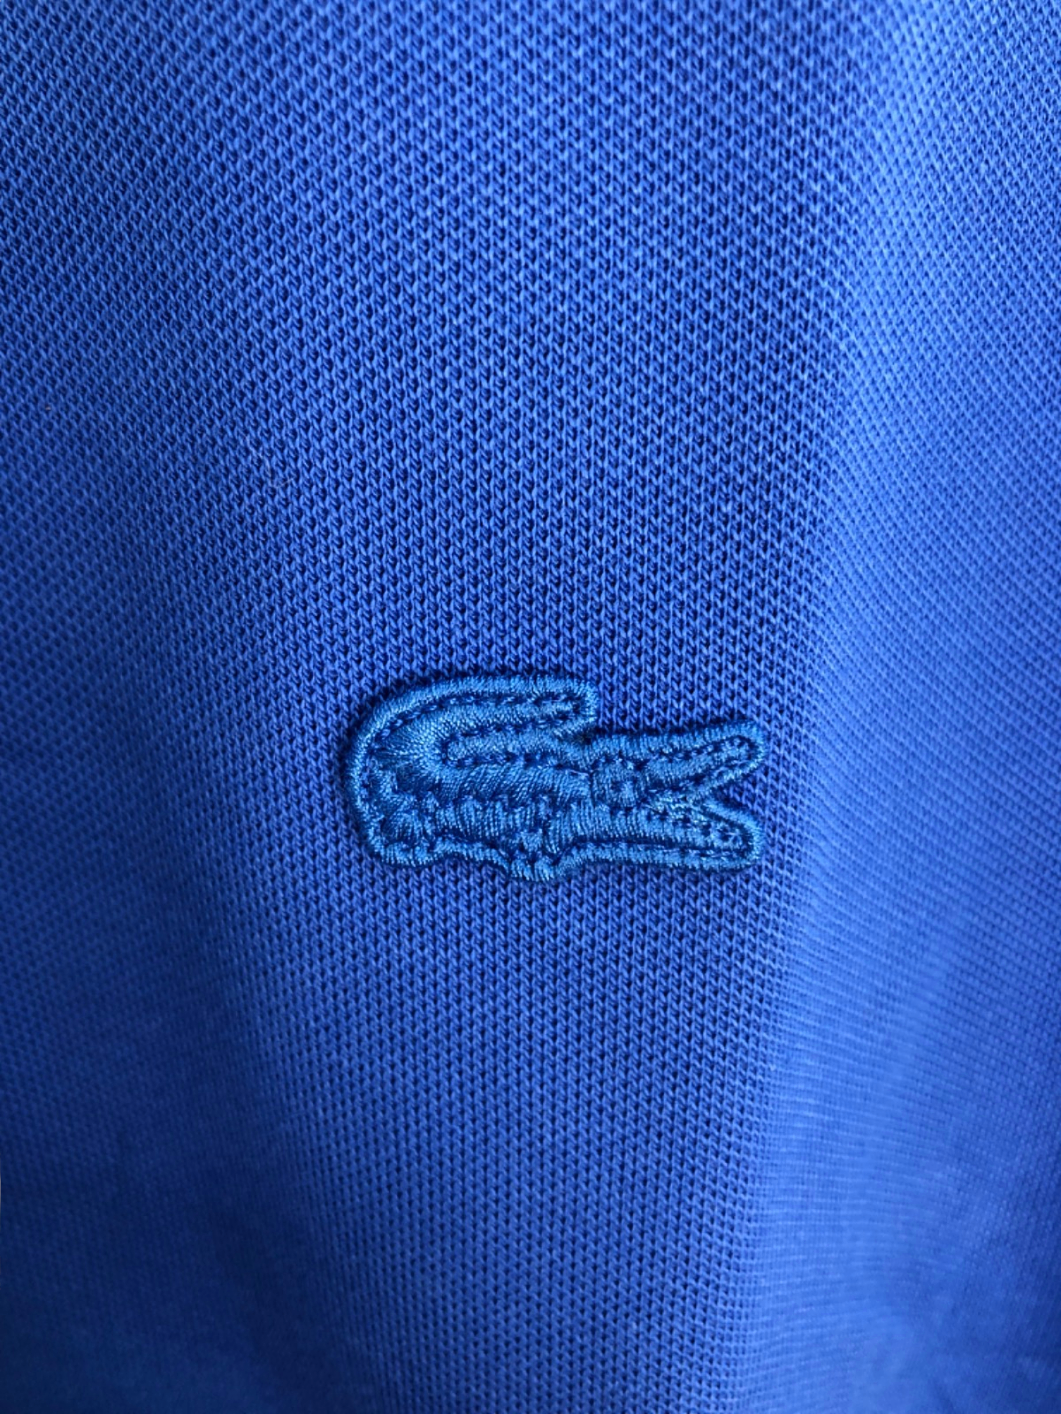 Lacoste Blue Regular Fit Polo Shirt UK L